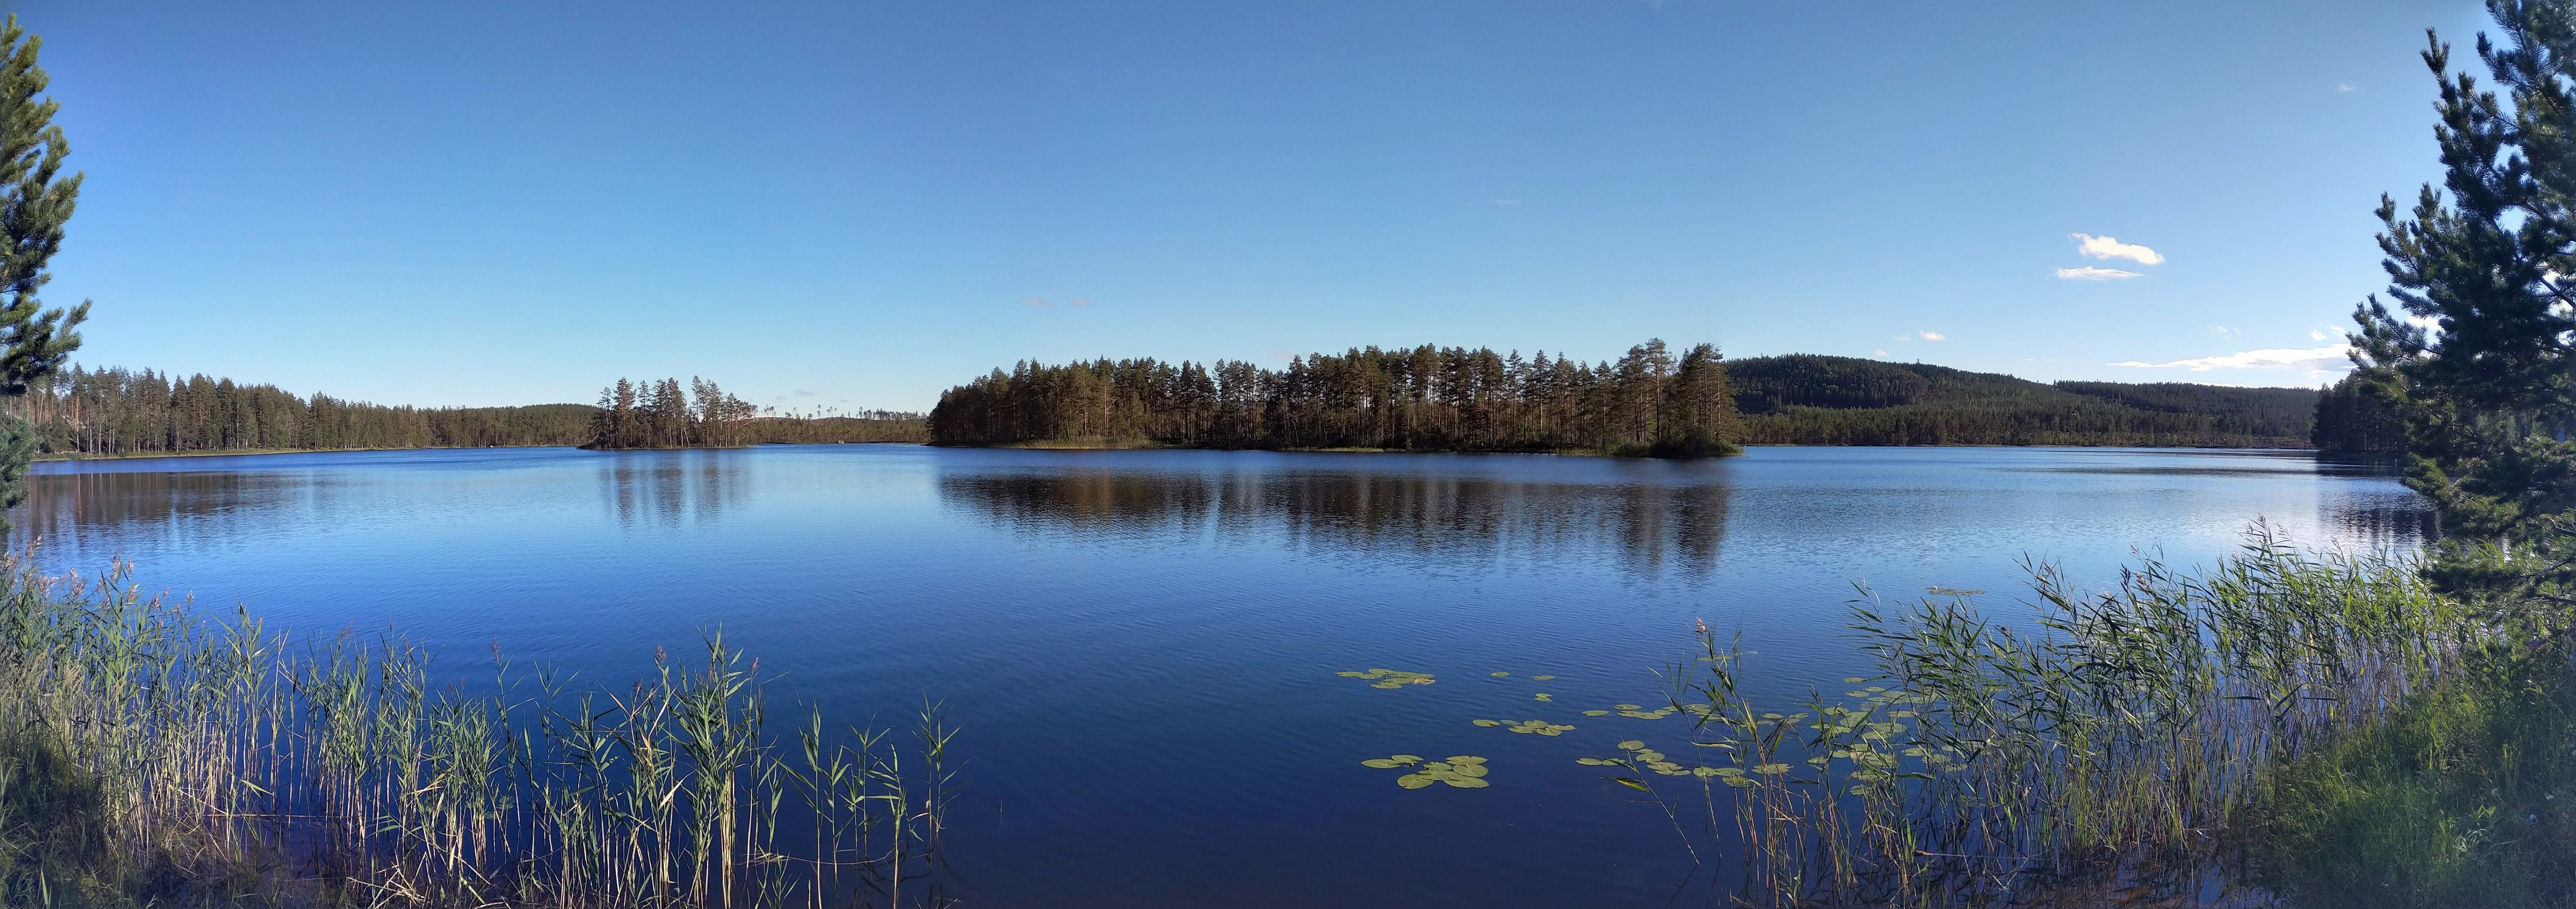 a pretty pond in sweden